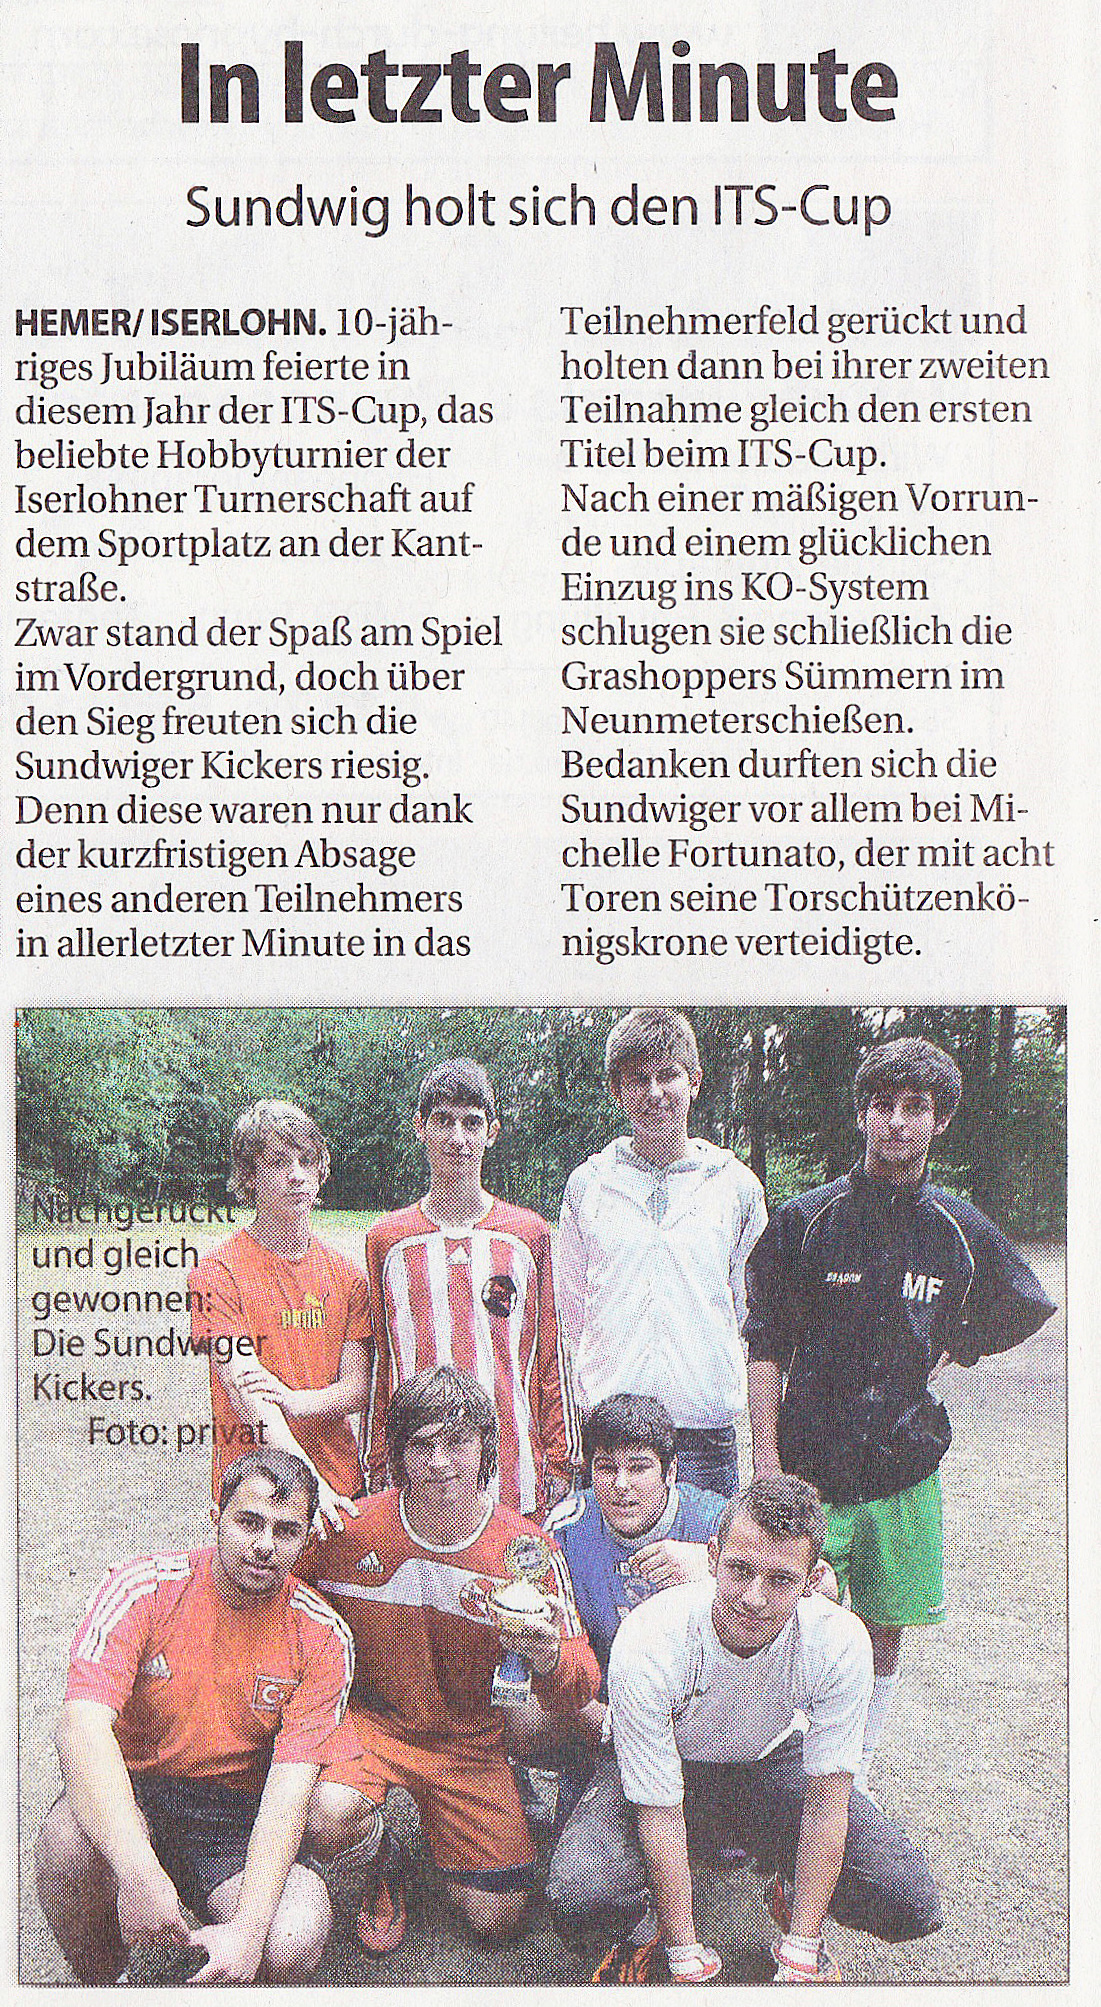 Stadtspiegel bericht its cup 2011 retina